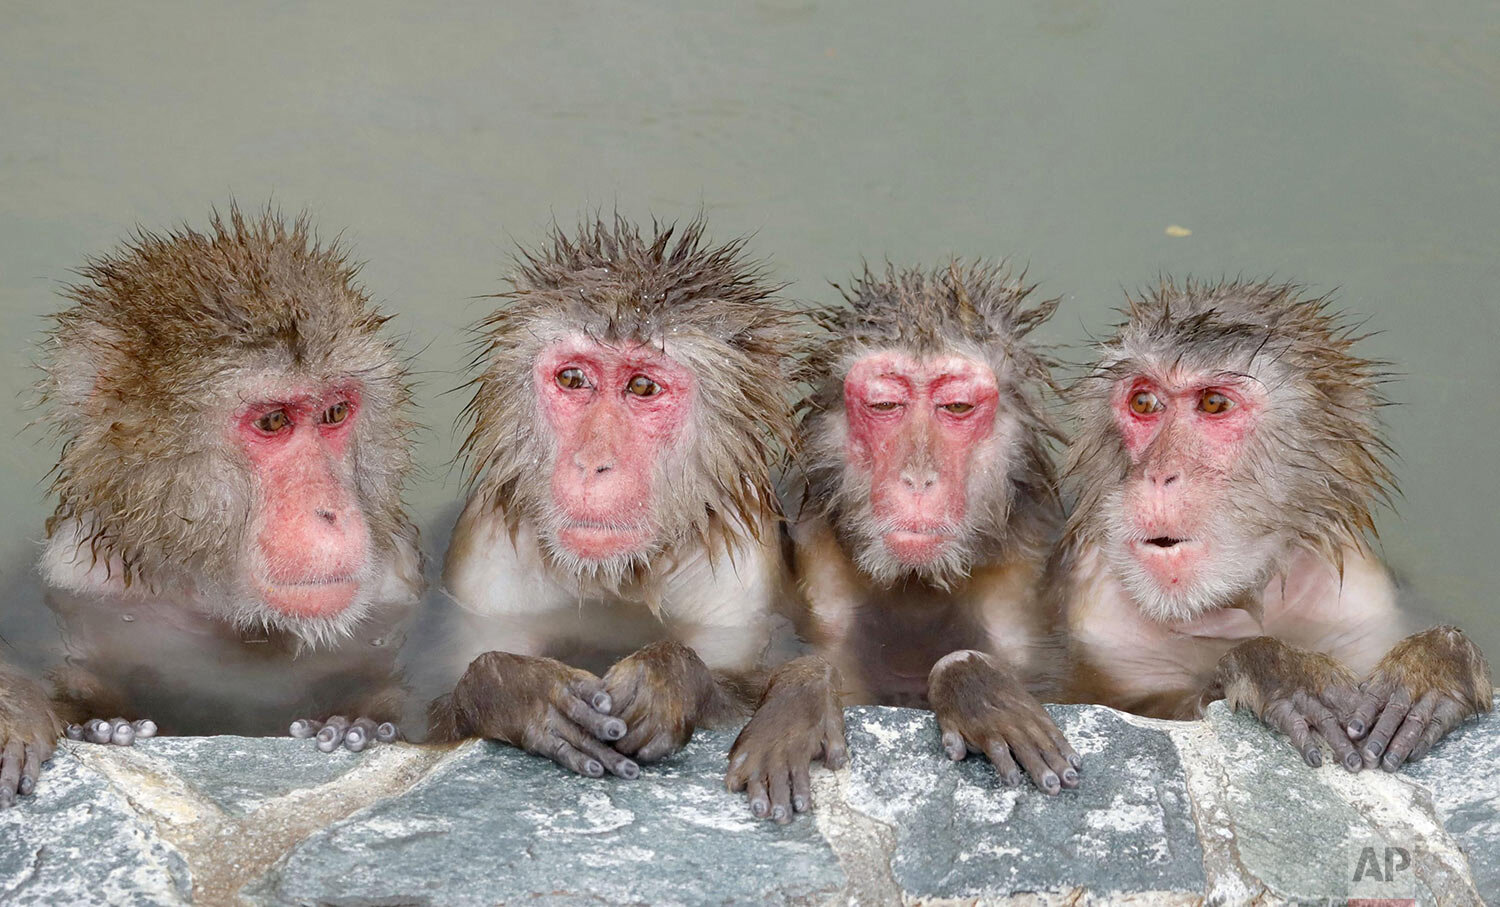  Japanese macaque, also known as snow monkeys,  soak in a hot spring at a Hakodate Tropical Botanical Garden in Hakodate, northern Japan, Sunday, Dec. 1, 2019. (Yohei Fukai/Kyodo News via AP) 